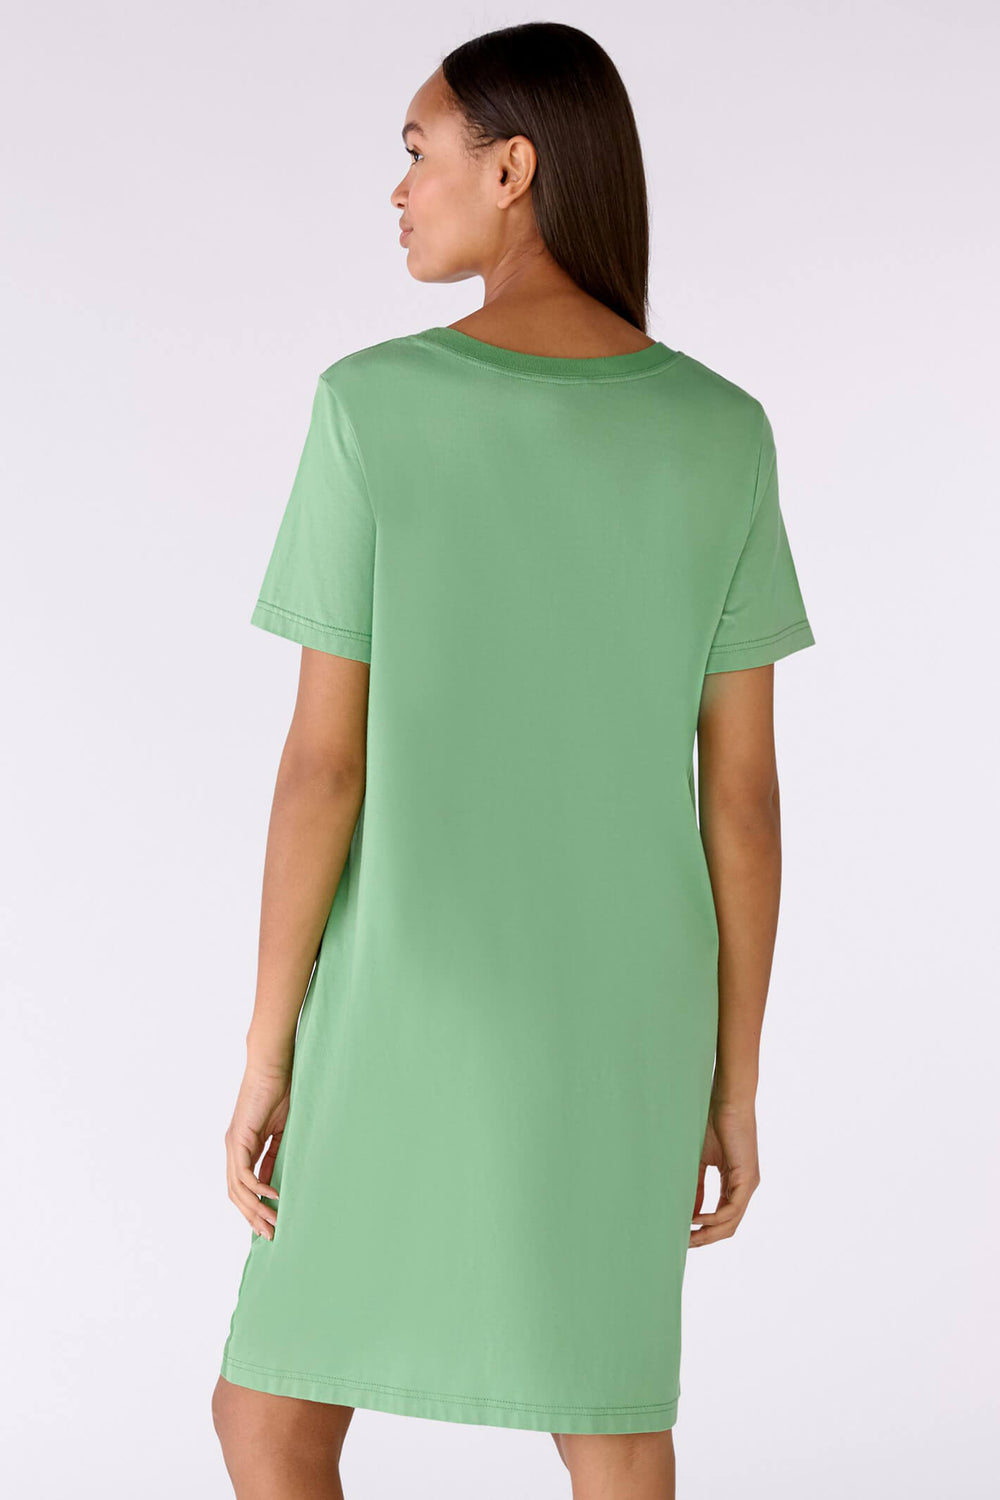 Oui 78504 Leaf Green Linen & Cotton Short Sleeve Dress - Shirley Allum Boutique